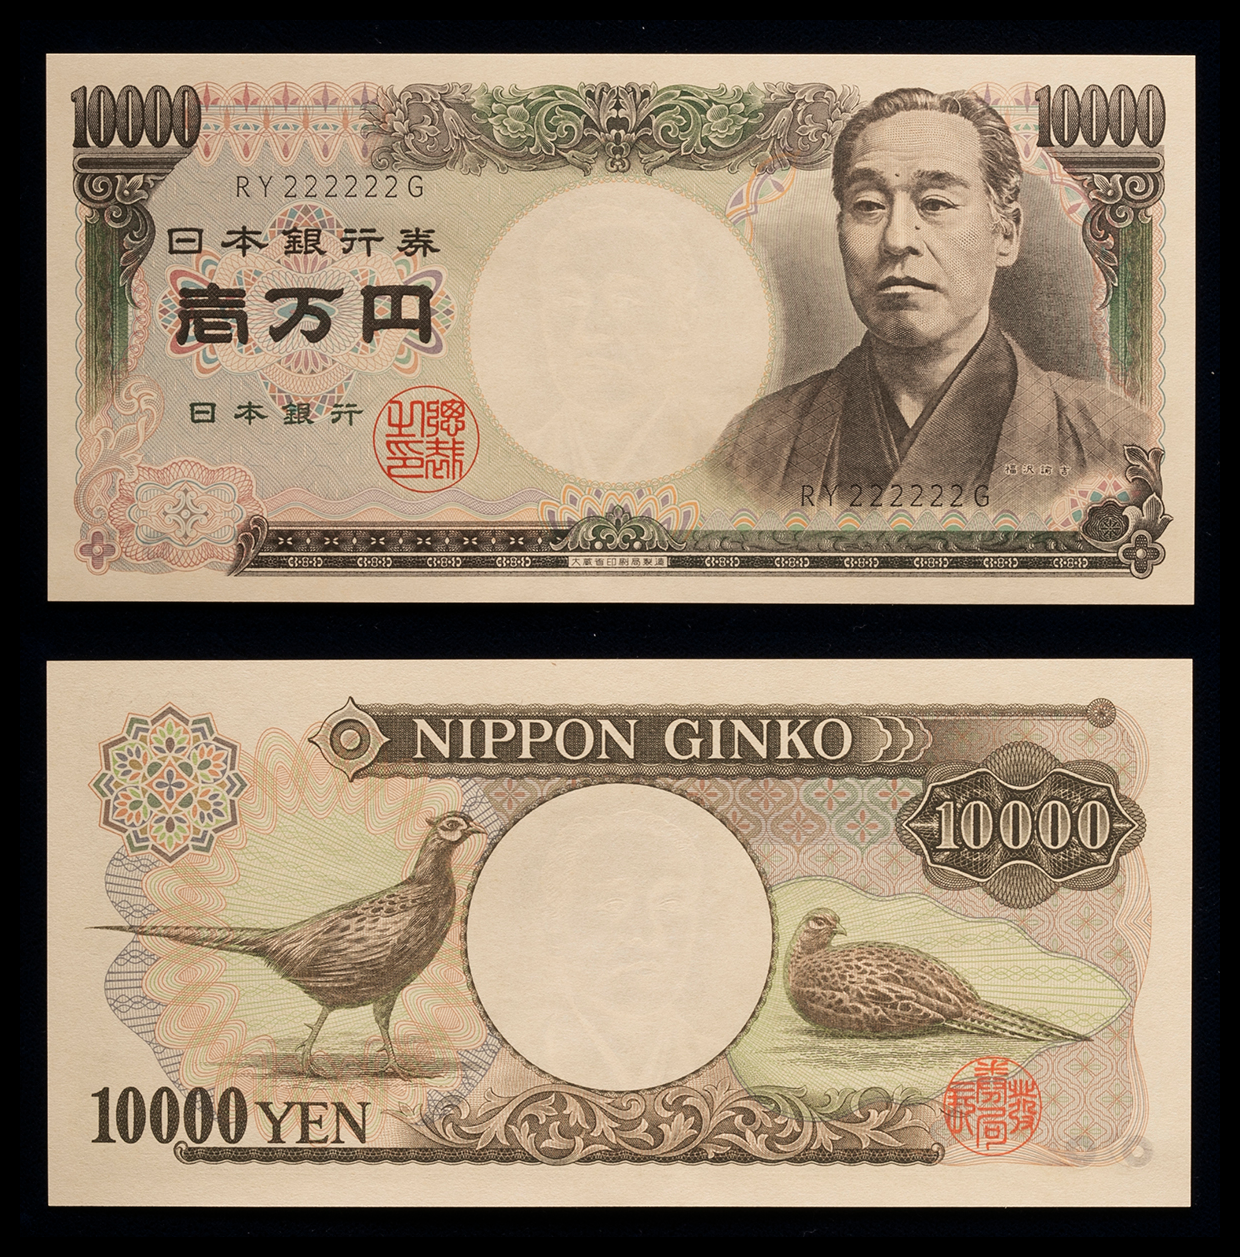 福沢諭吉 貴重 ホログラムなし 一万円札 紙幣 日本銀行券 1万円札 円札 - 貨幣 - 紙幣